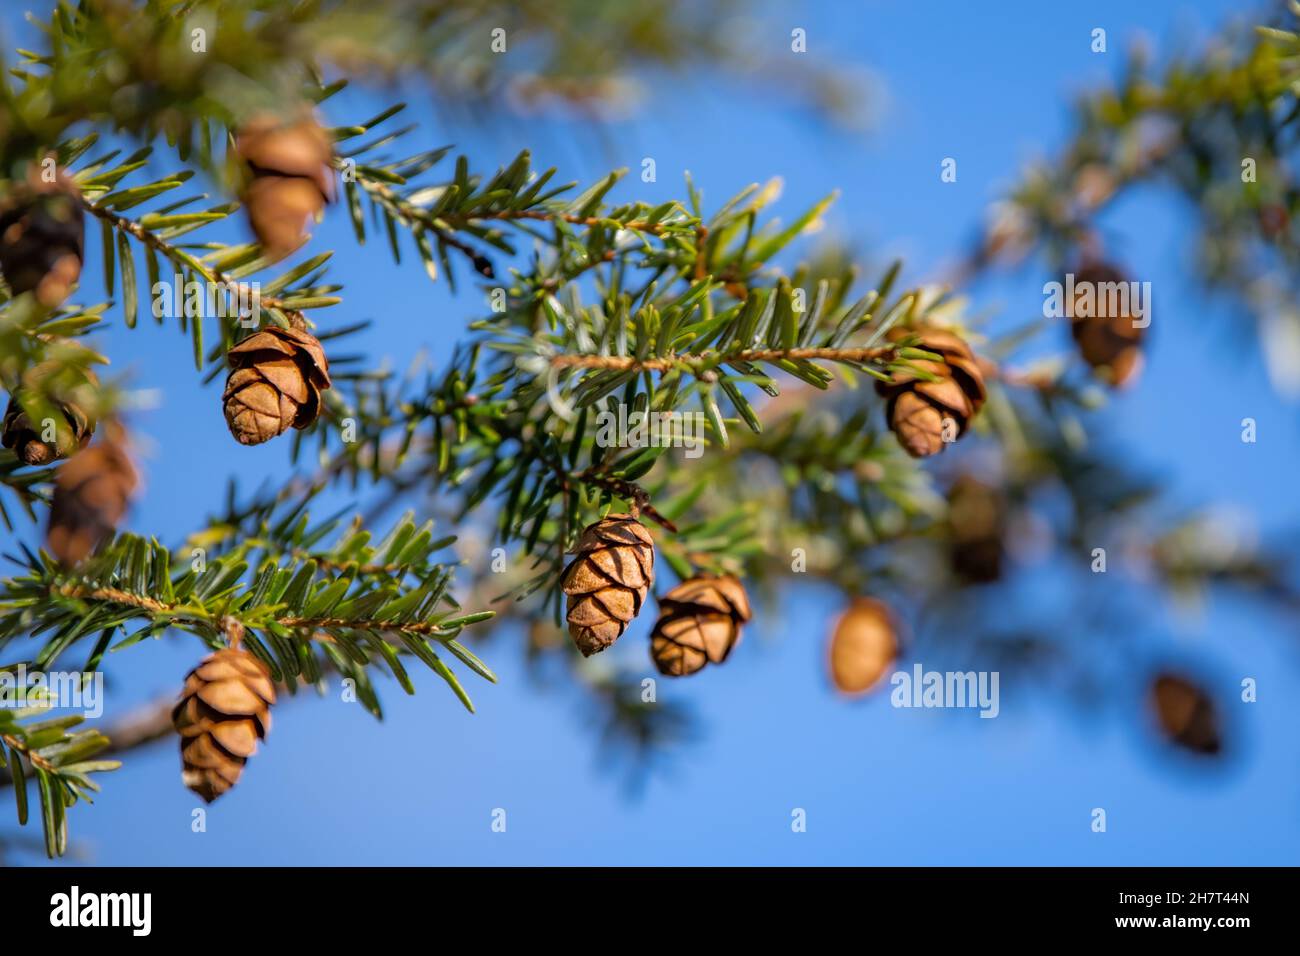 Pruche de l'est - pruche du Canada - Tsuga ou Tsuga canadensis - conifères de pins Adirondack avec cônes de pins dans le parc national Adirondack Banque D'Images